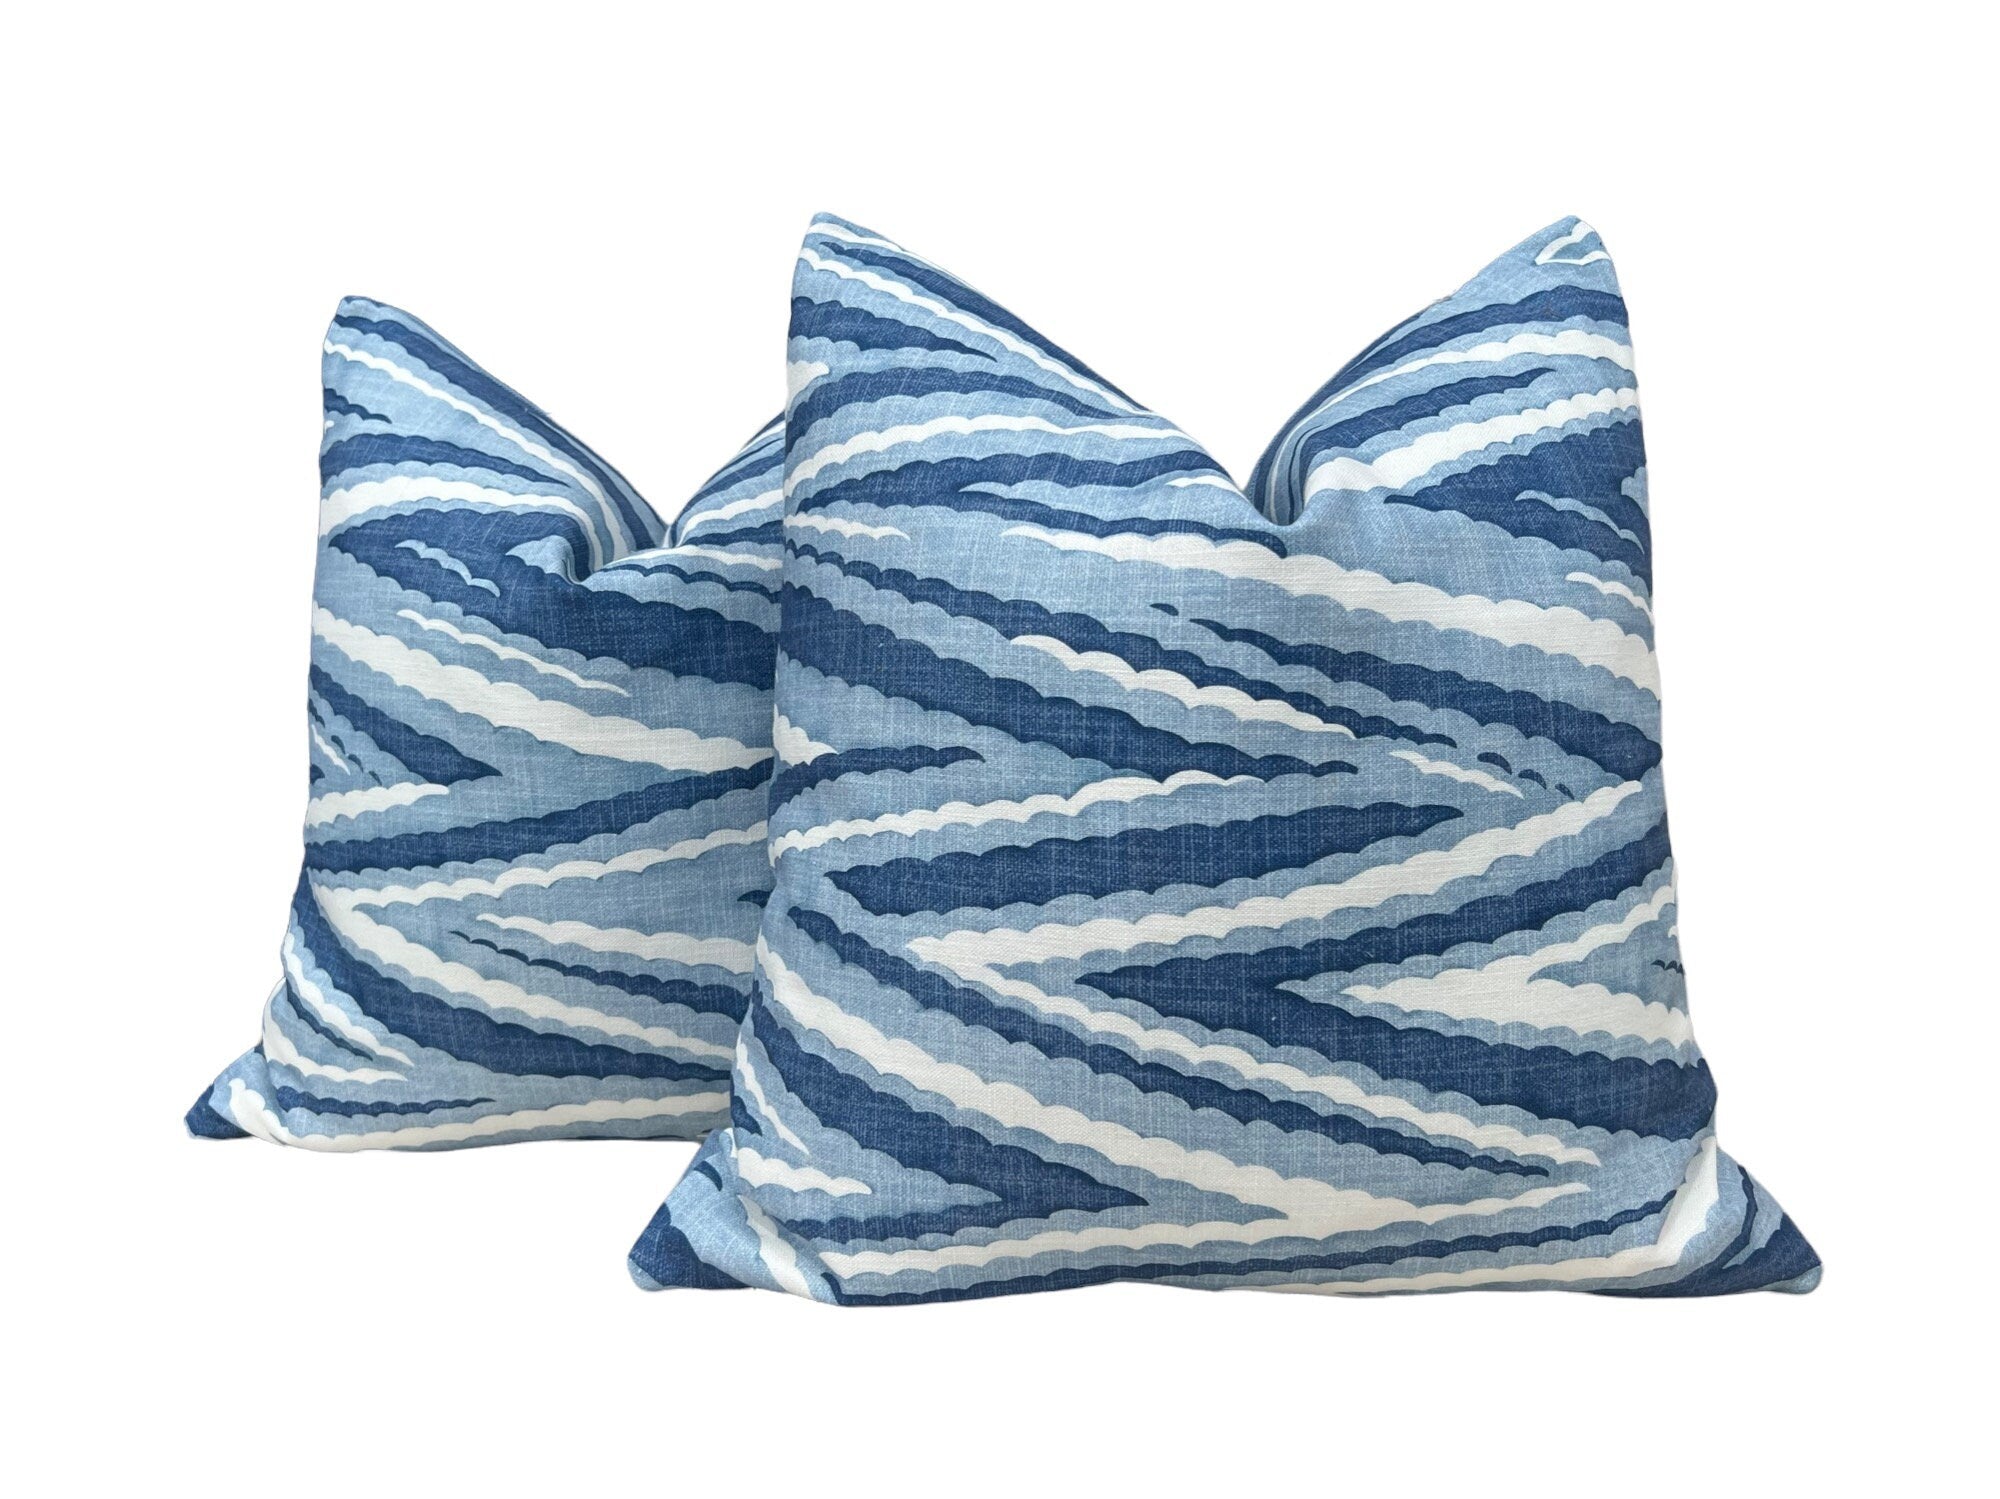 Thibaut Highland Peak in Blue. Designer Pillows, High End Pillows, Zig Zag Navy Blue and White Pillow Cover, Blue Stripes Pillow, Euro Sham